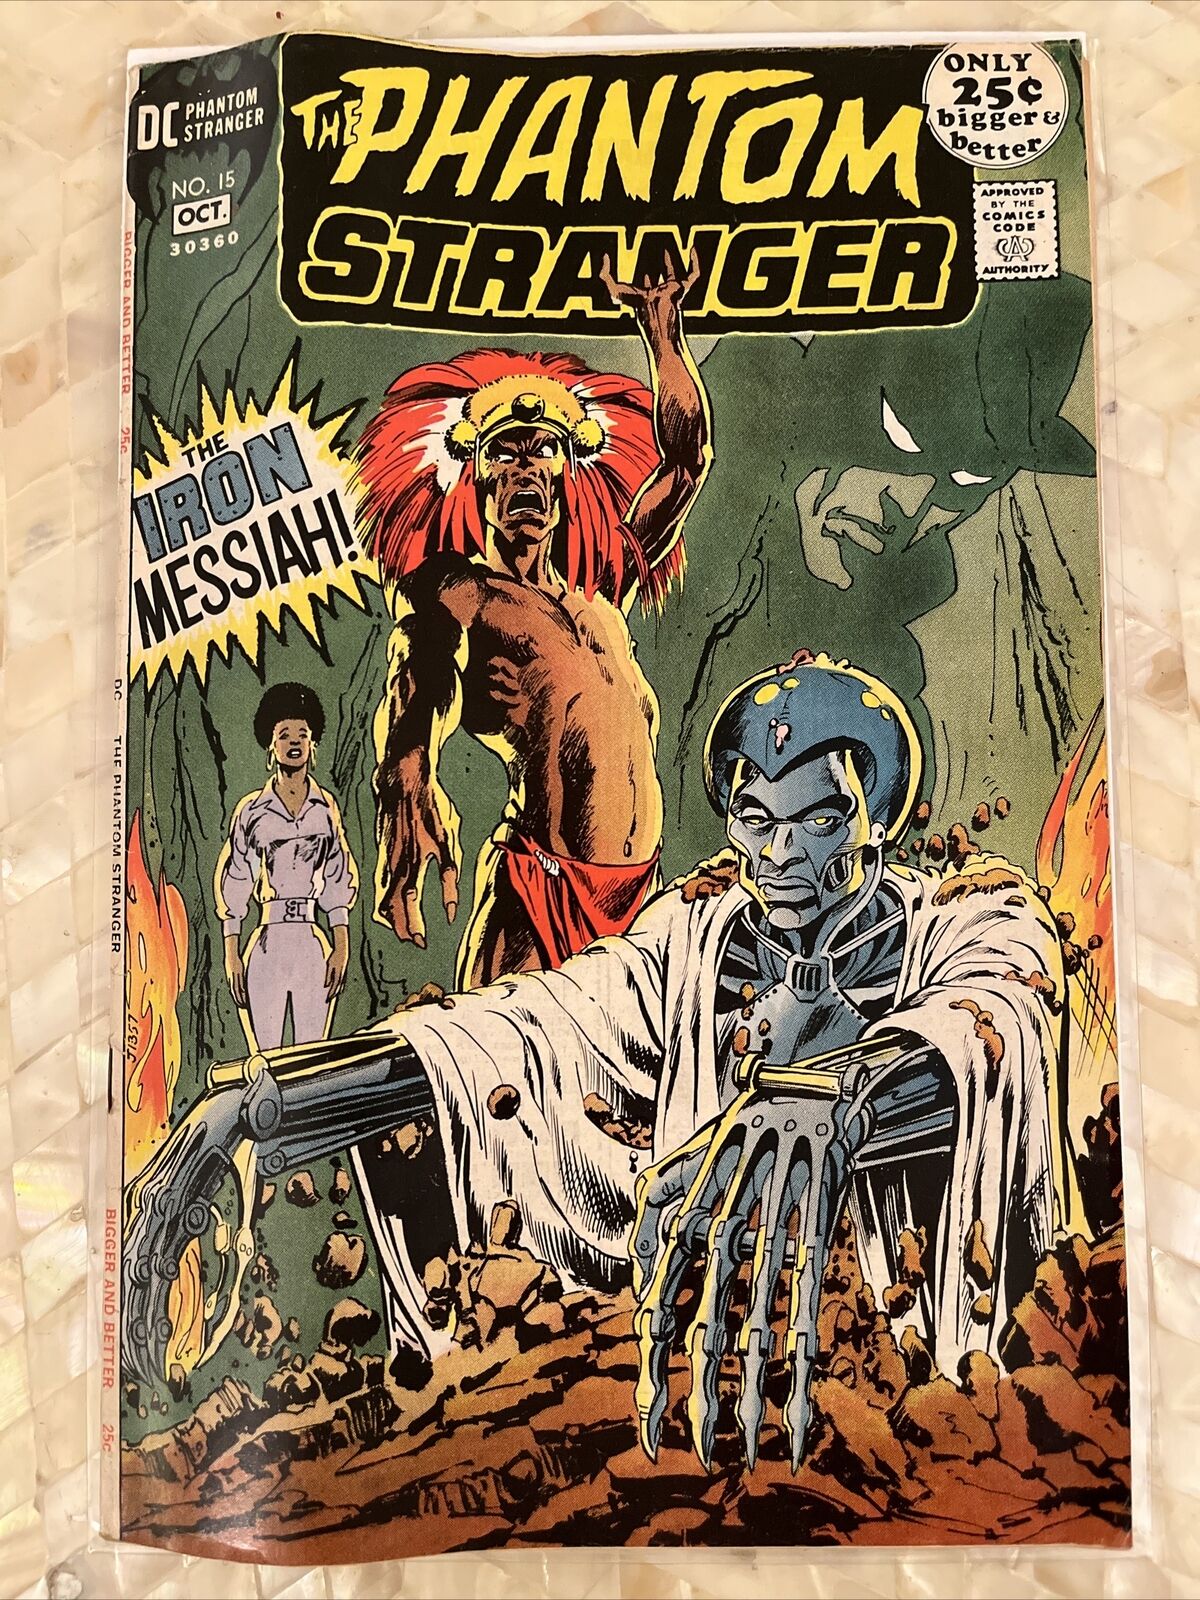 PHANTOM STRANGER#15 1971 NEAL ADAMS COVER DC BRONZE AGE COMICS